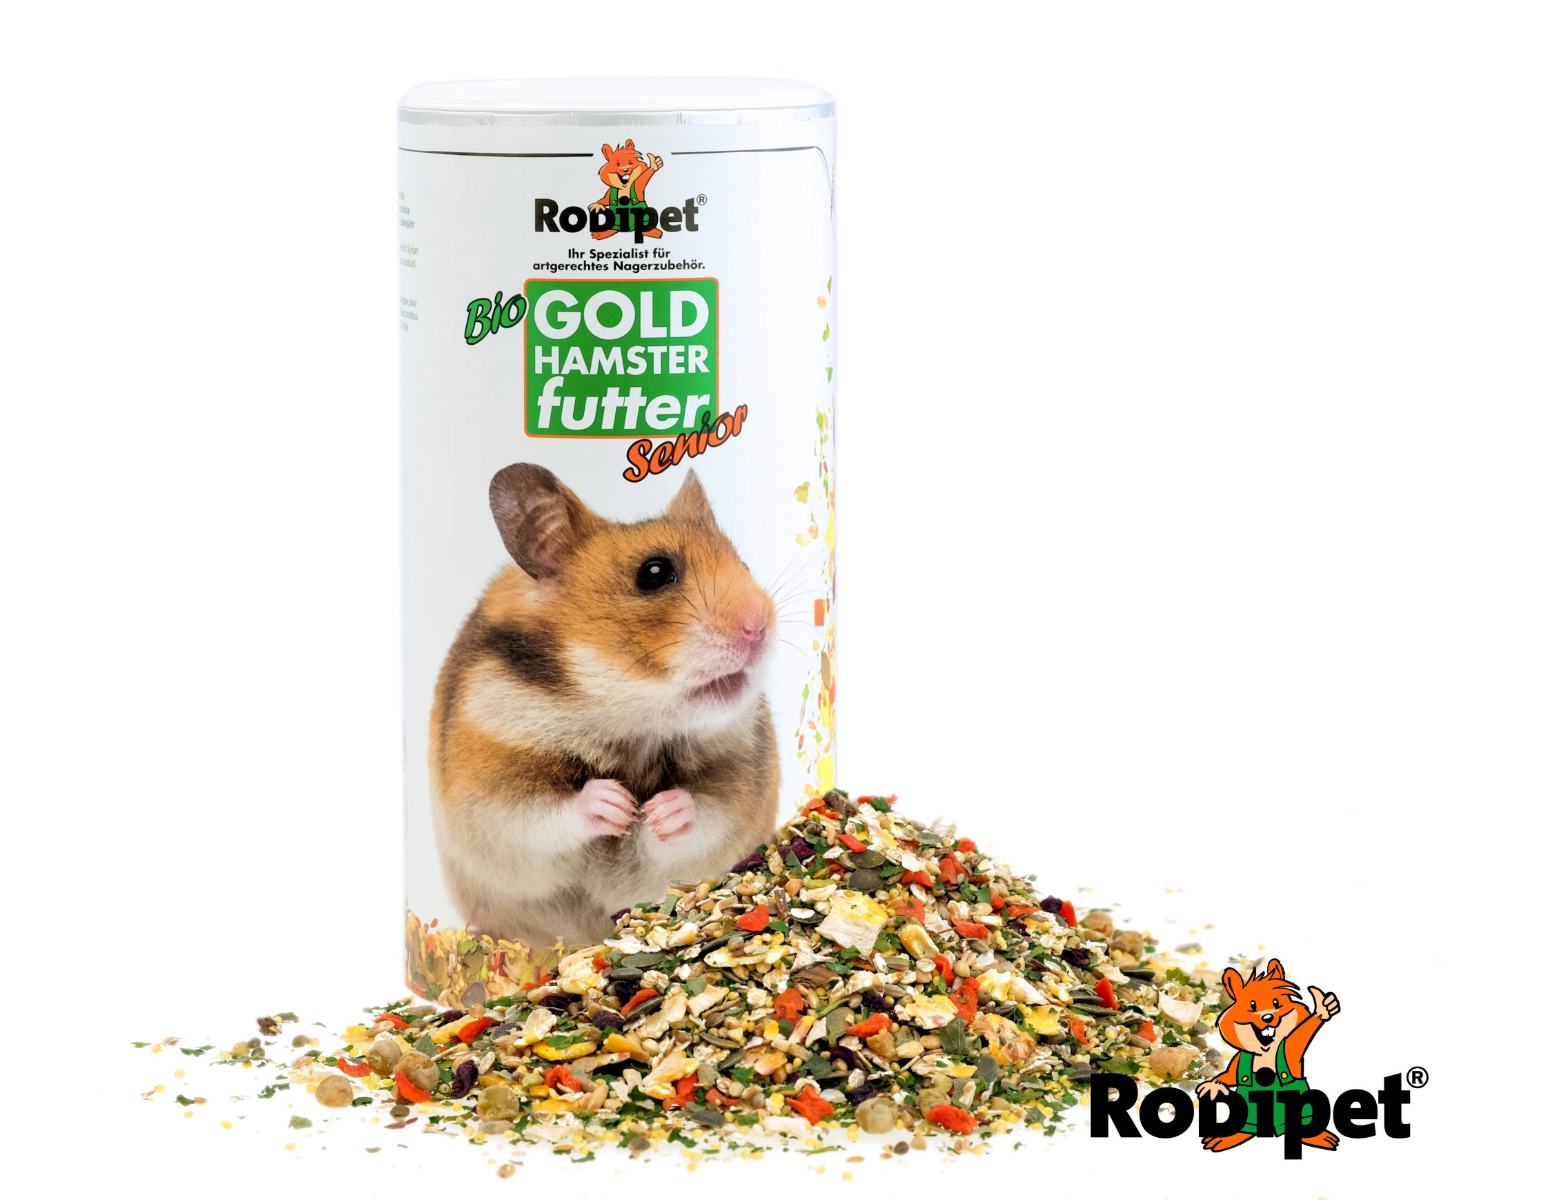 RODIPET Organic Syrian Hamster Food "SENIOR" 500g